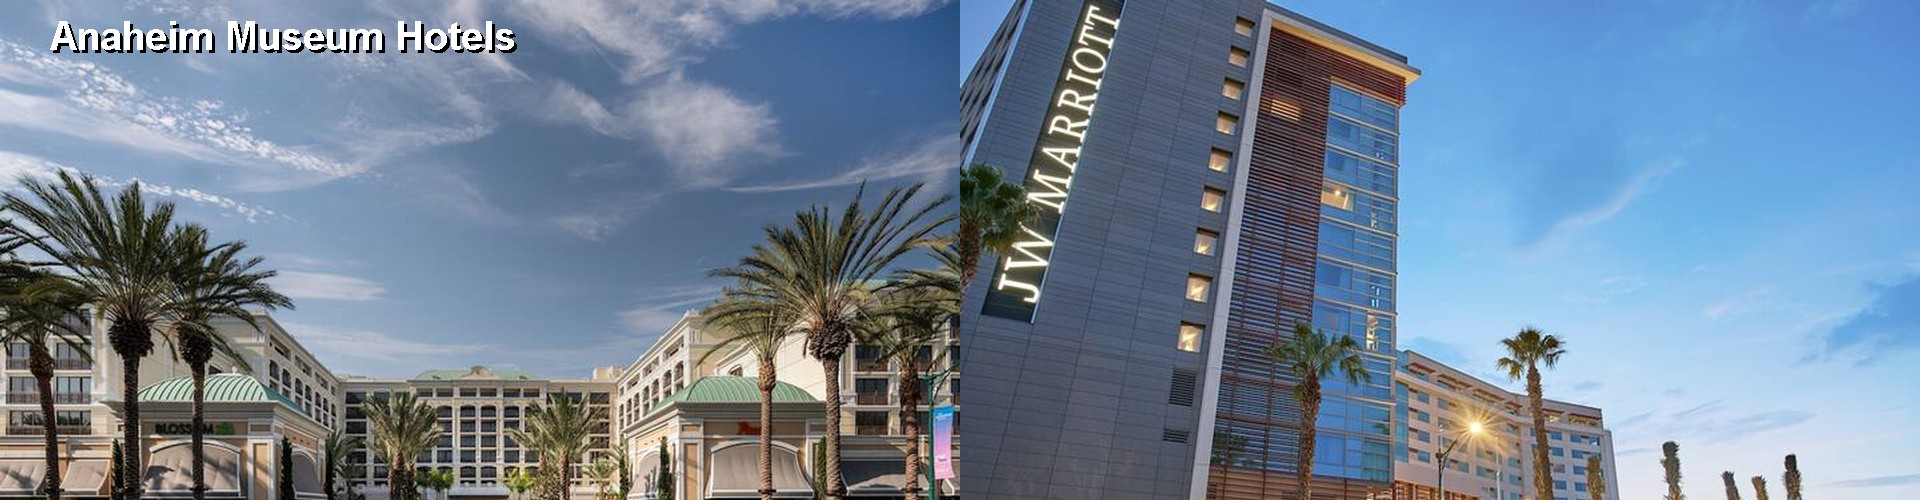 5 Best Hotels near Anaheim Museum